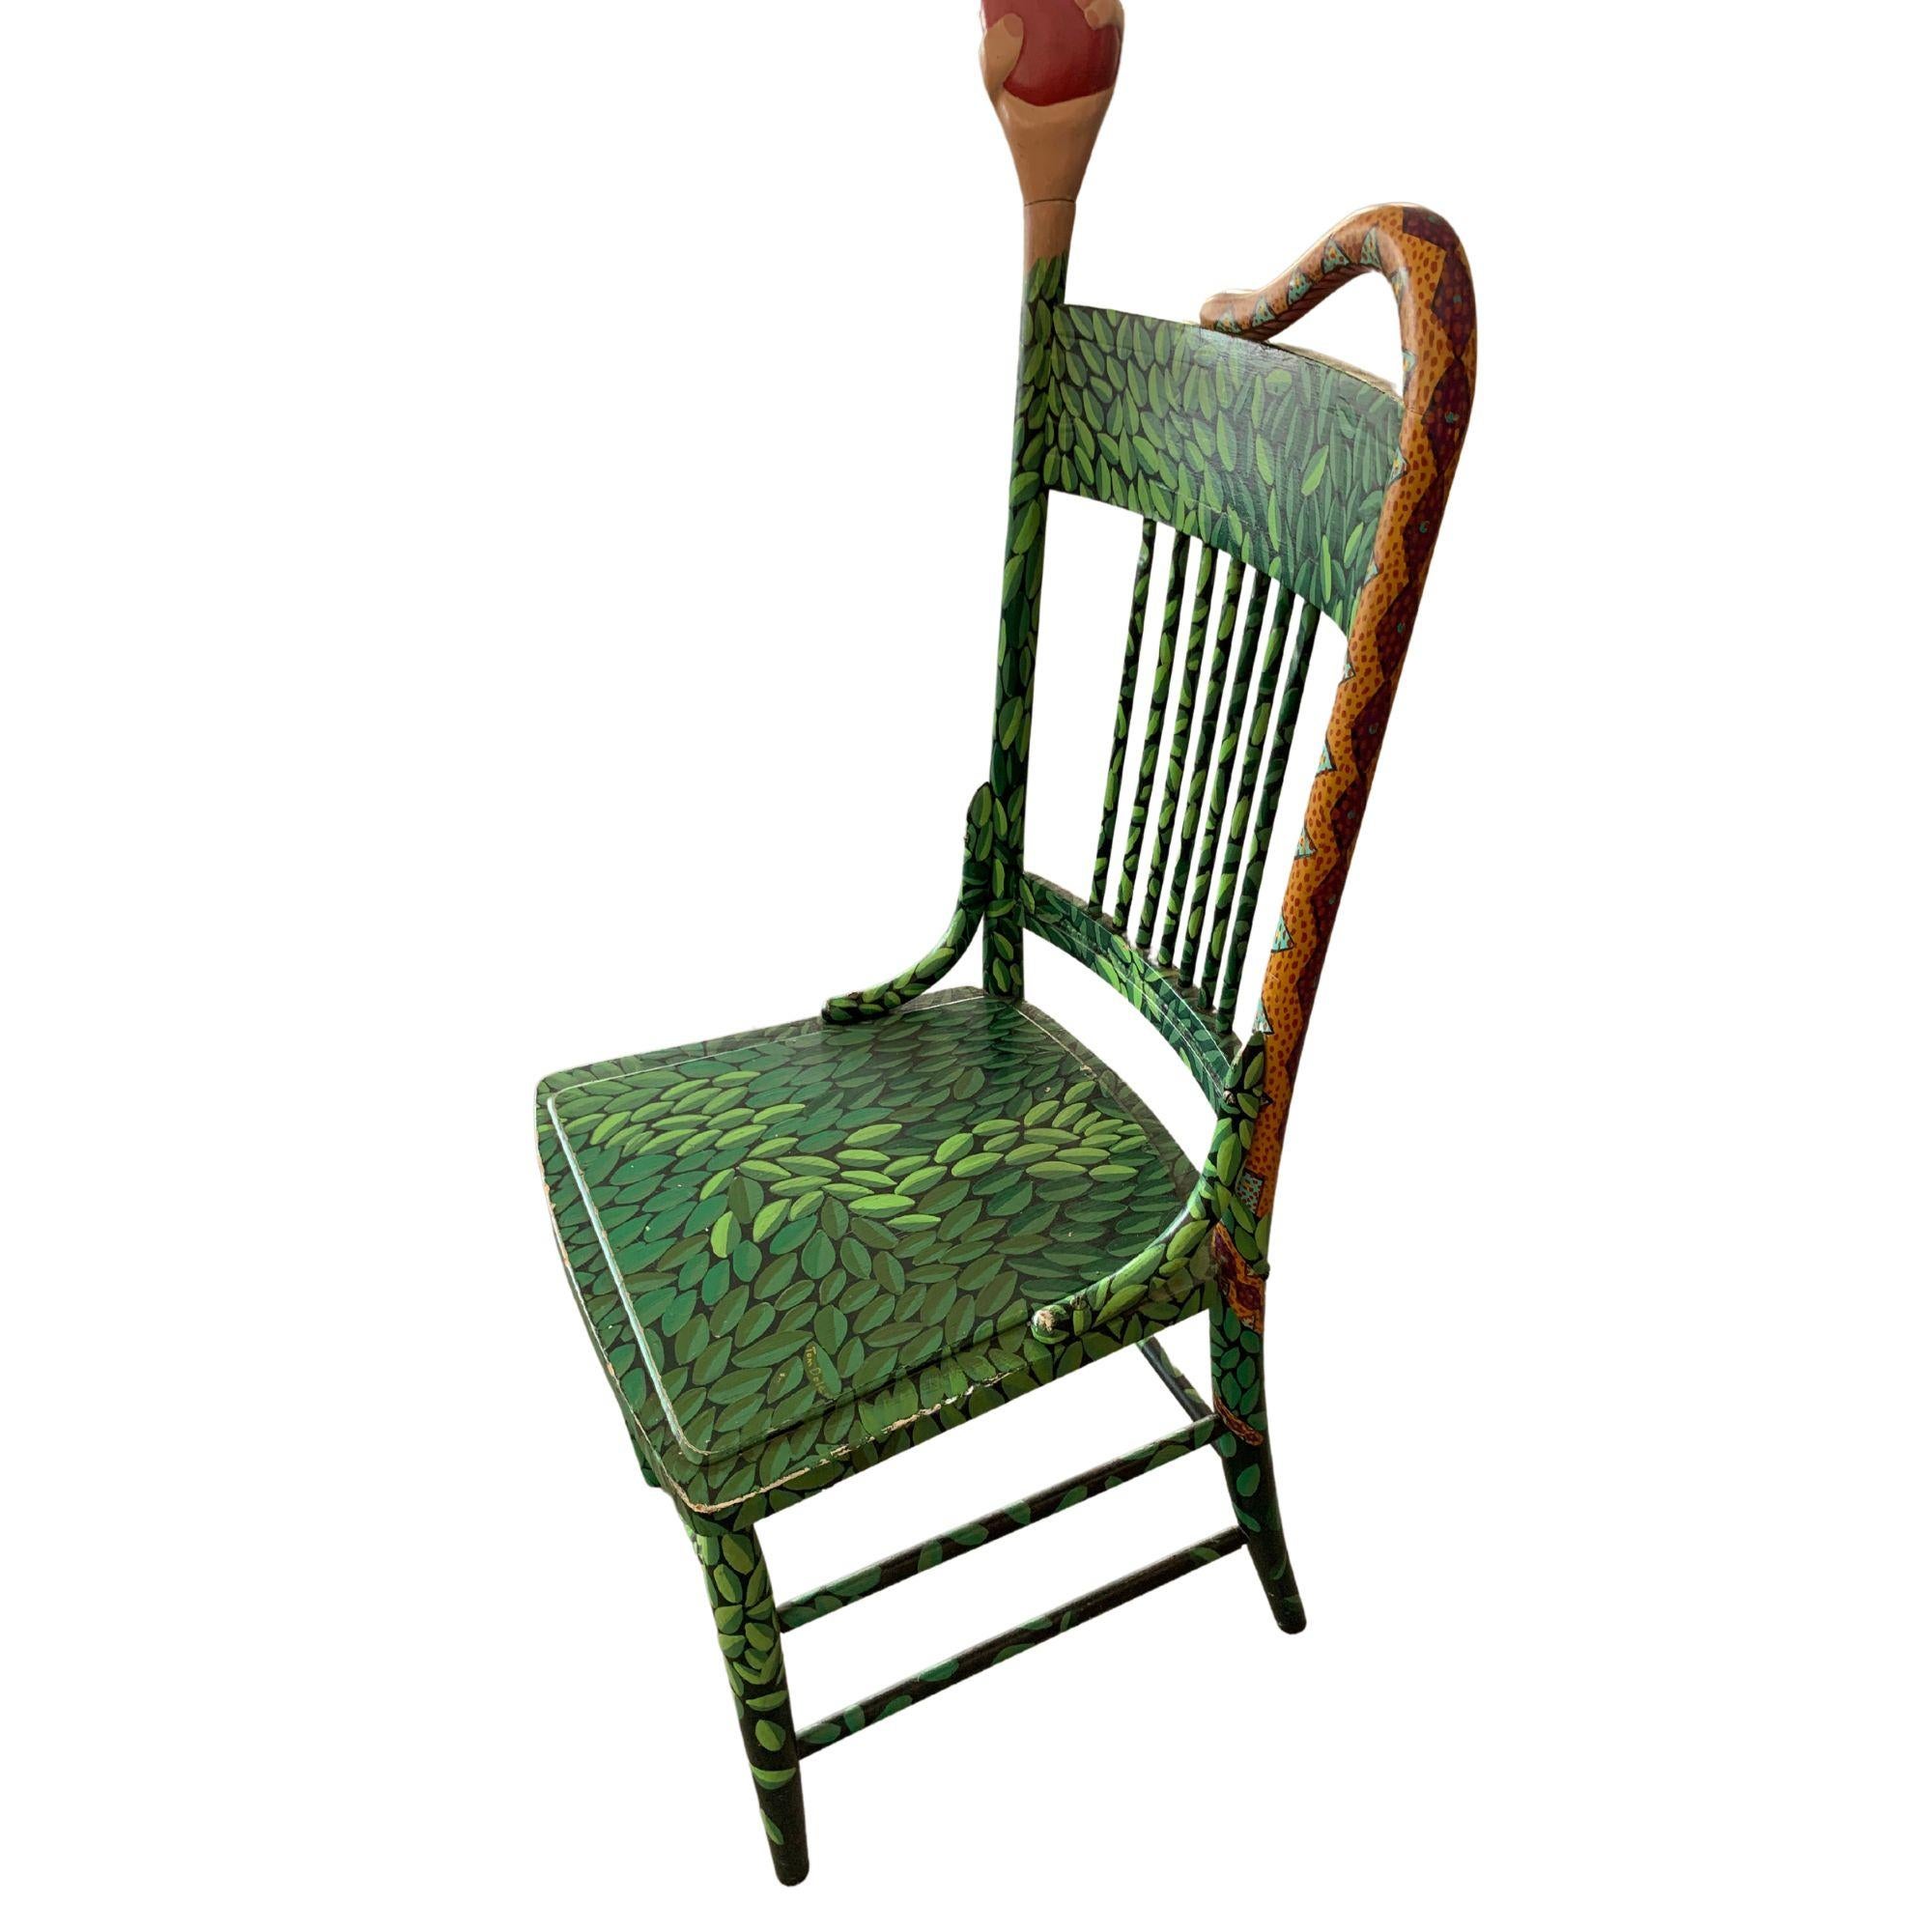 Tom Dolan Hand Painted Adam and Eve Folk Chair